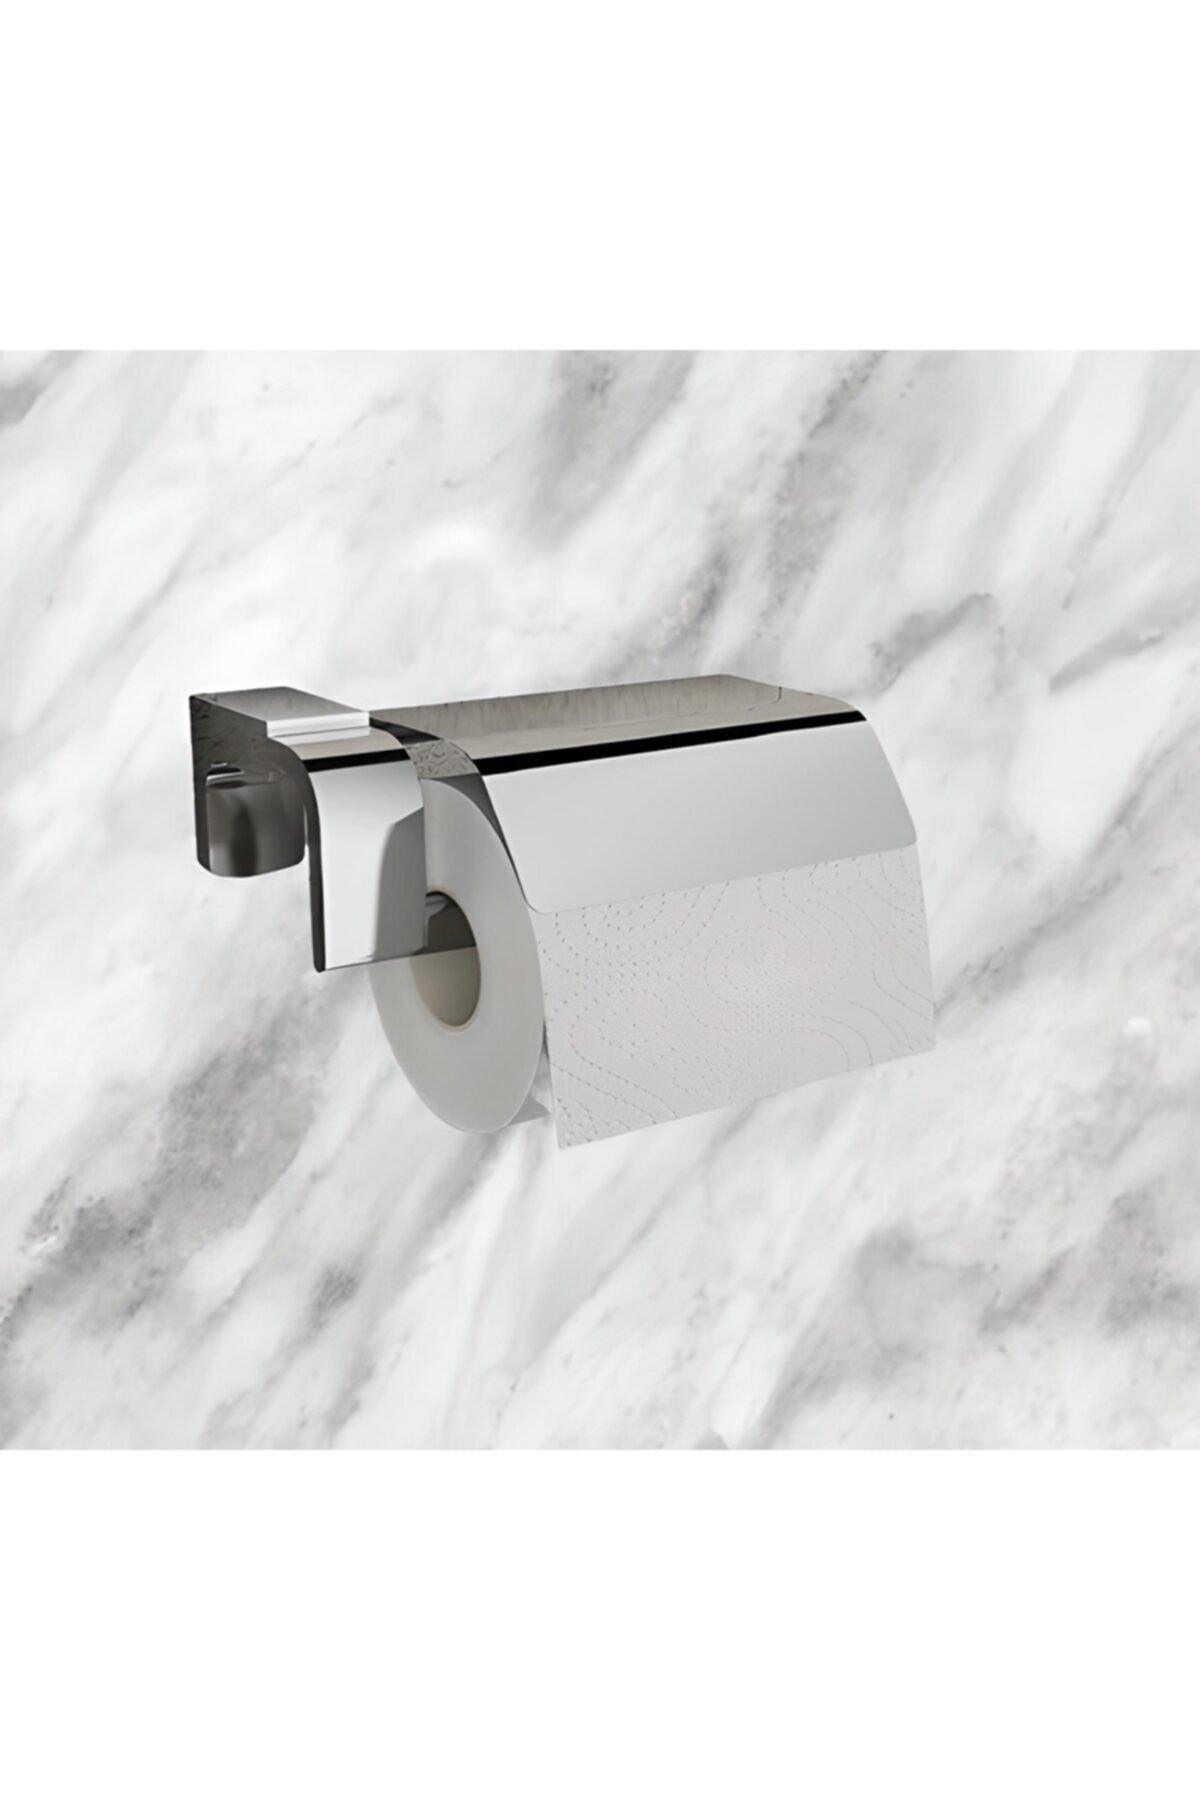 Lifetime Stainless Covered Toilet Roll Holder Wall Mounted Chrome F1-015 - Swordslife